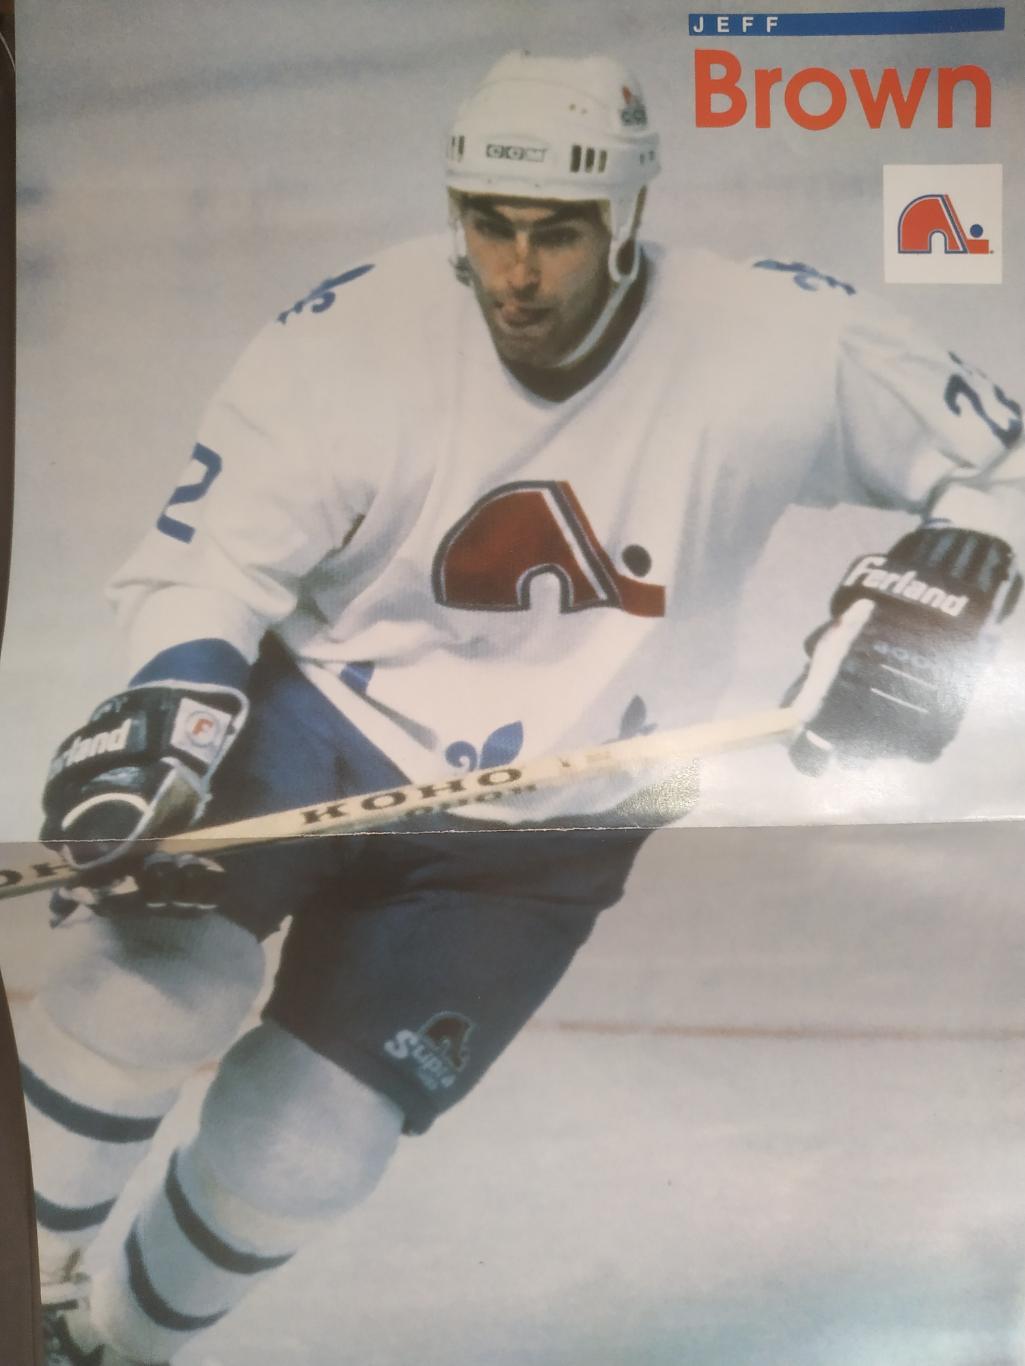 ХОККЕЙ ПОСТЕР НХЛ КВЕБЕК ДЖЕФФ БРАУН POSTER NHL QUEBEC JEFF BROWN #22 А3